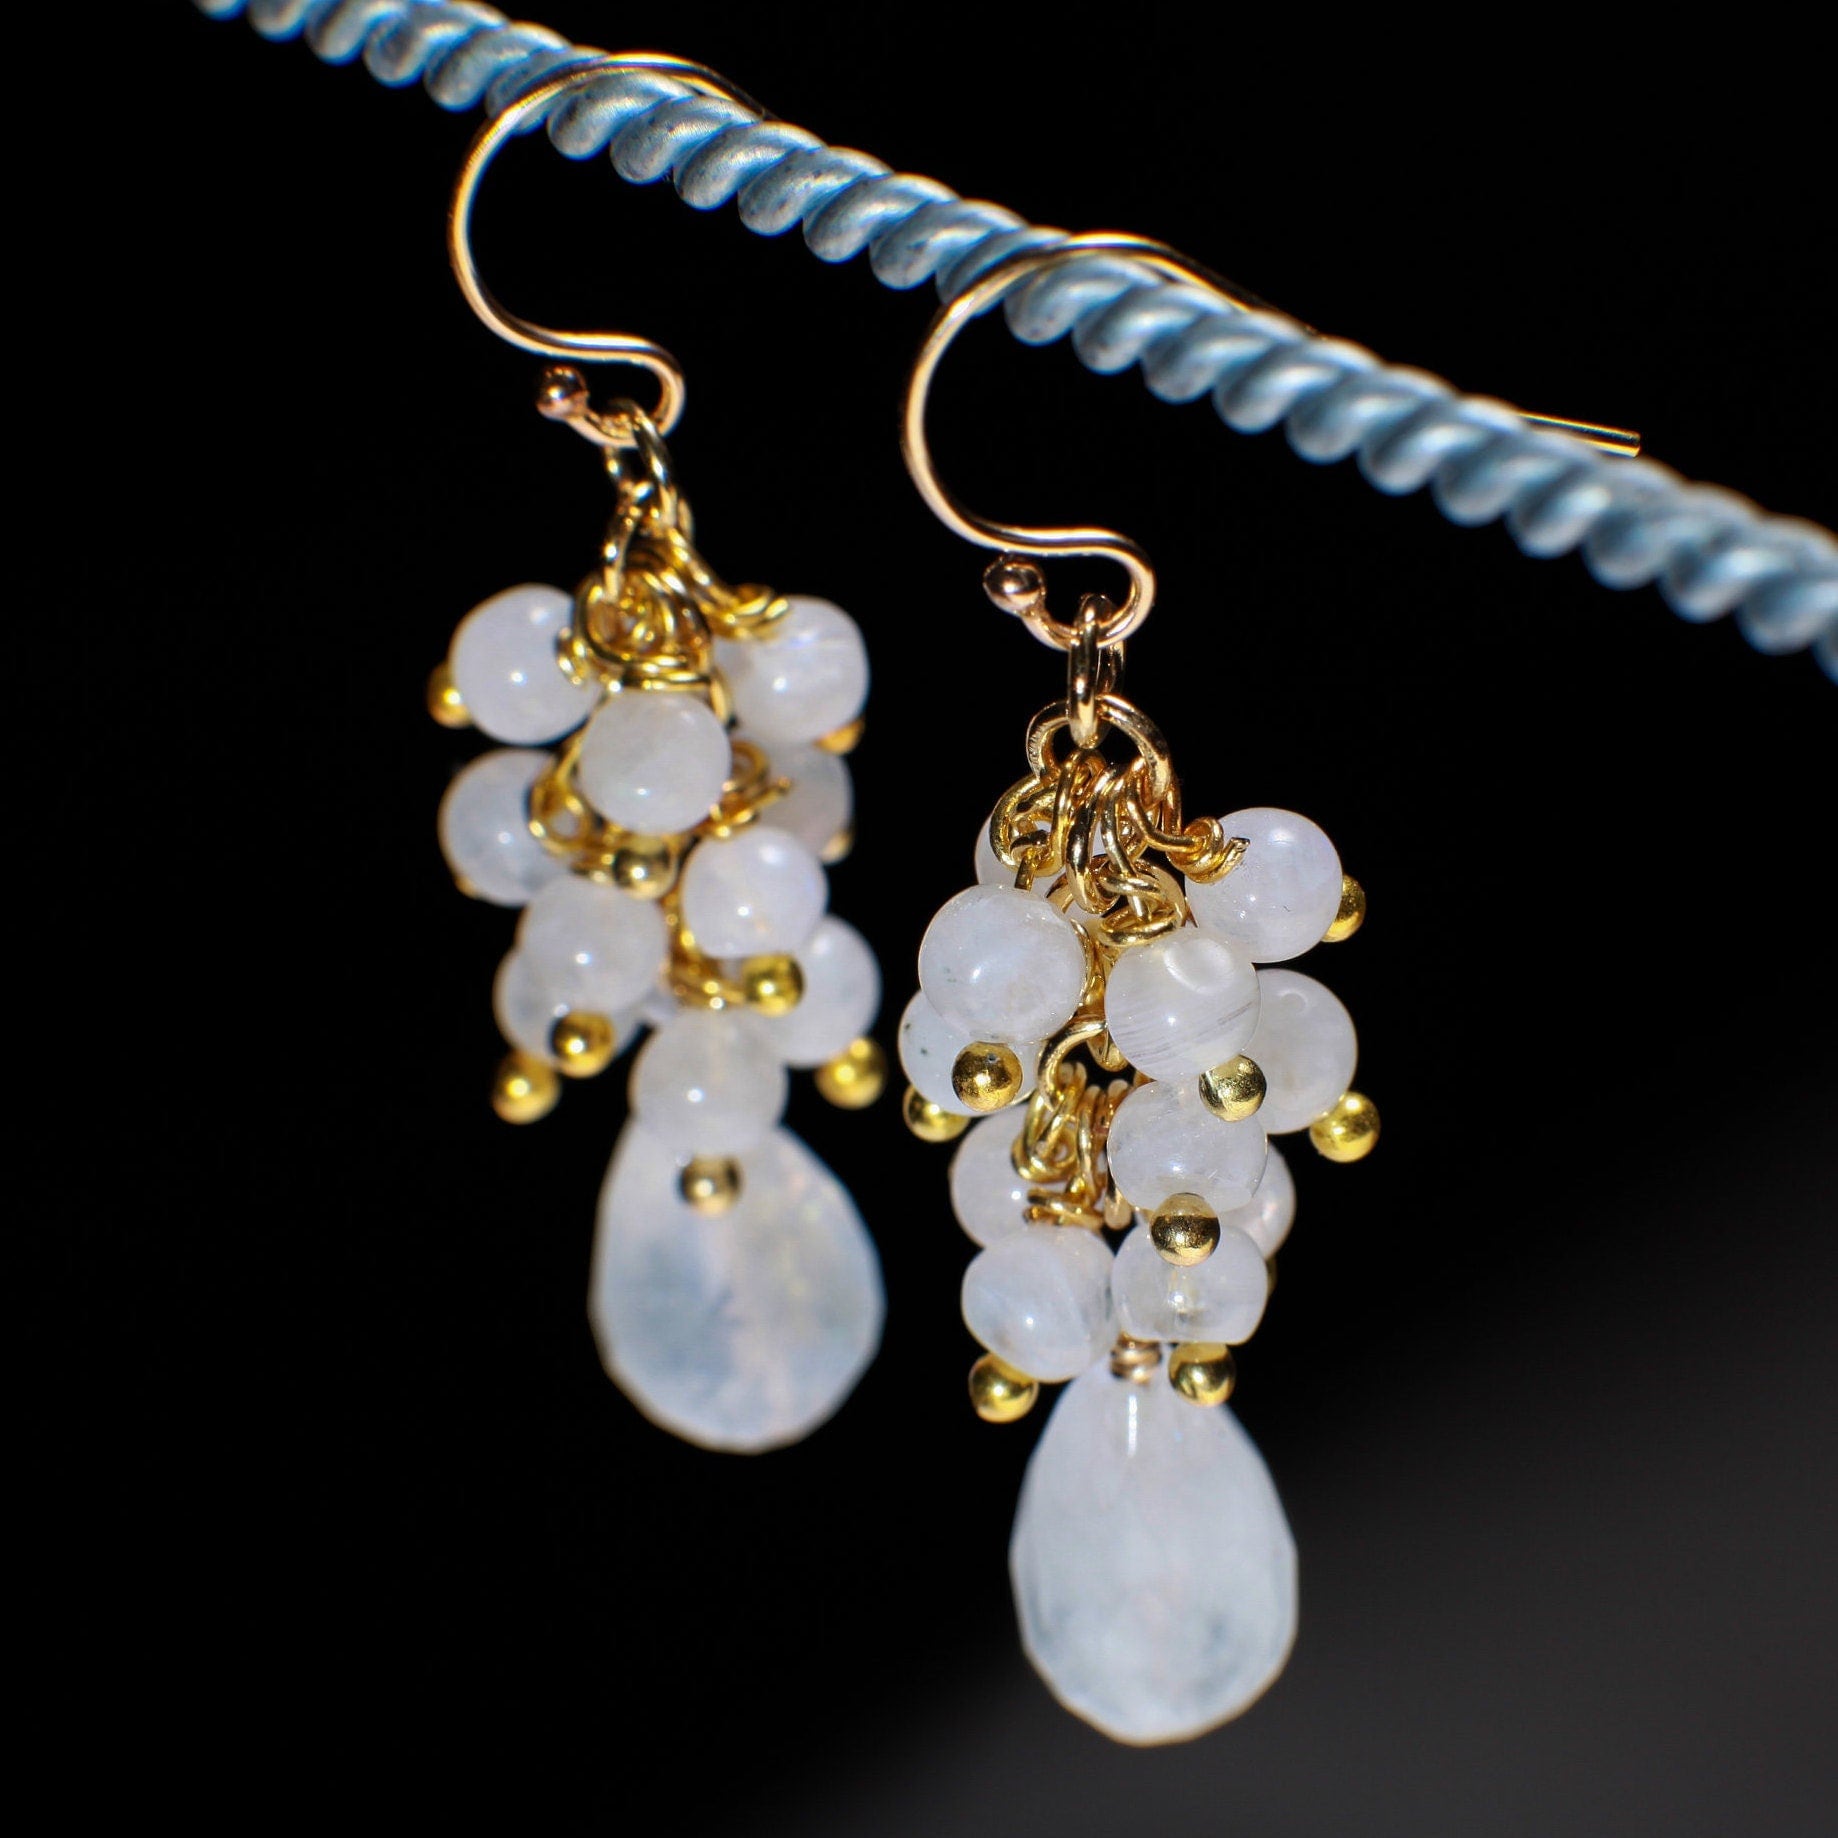 Moonstone Earring, Genuine Moonstone Clusters & Teardrop Wire Wrapped in 14K Gold Filled EarWire, June Birthstone,Bridal,White Earring, Gift